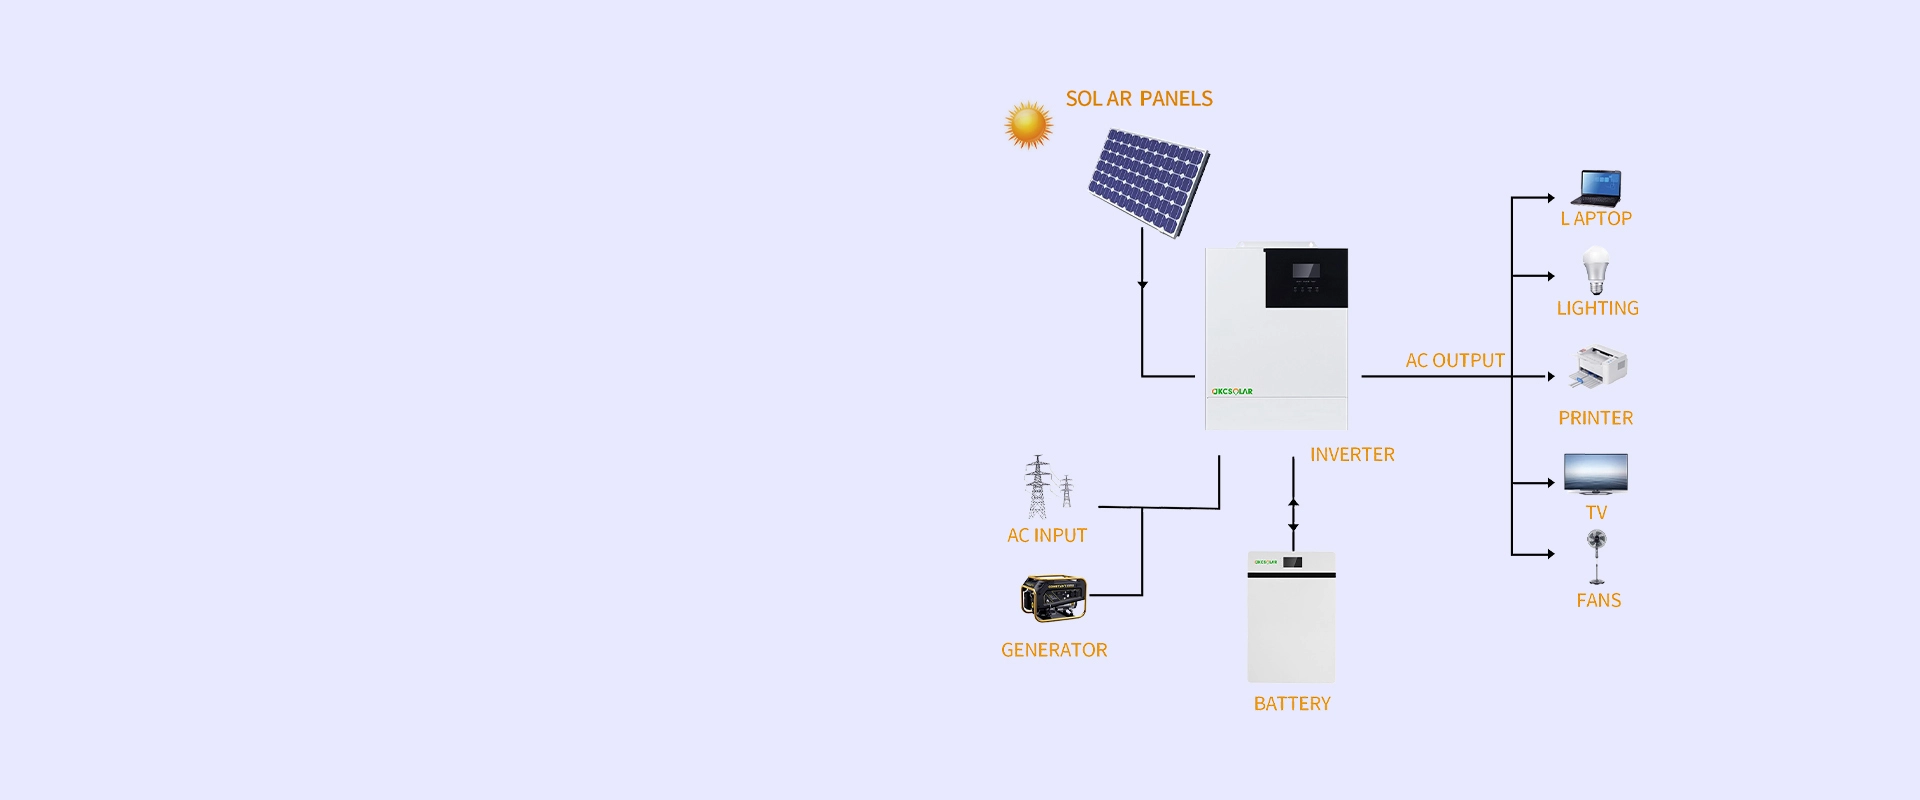 Sistem energi surya